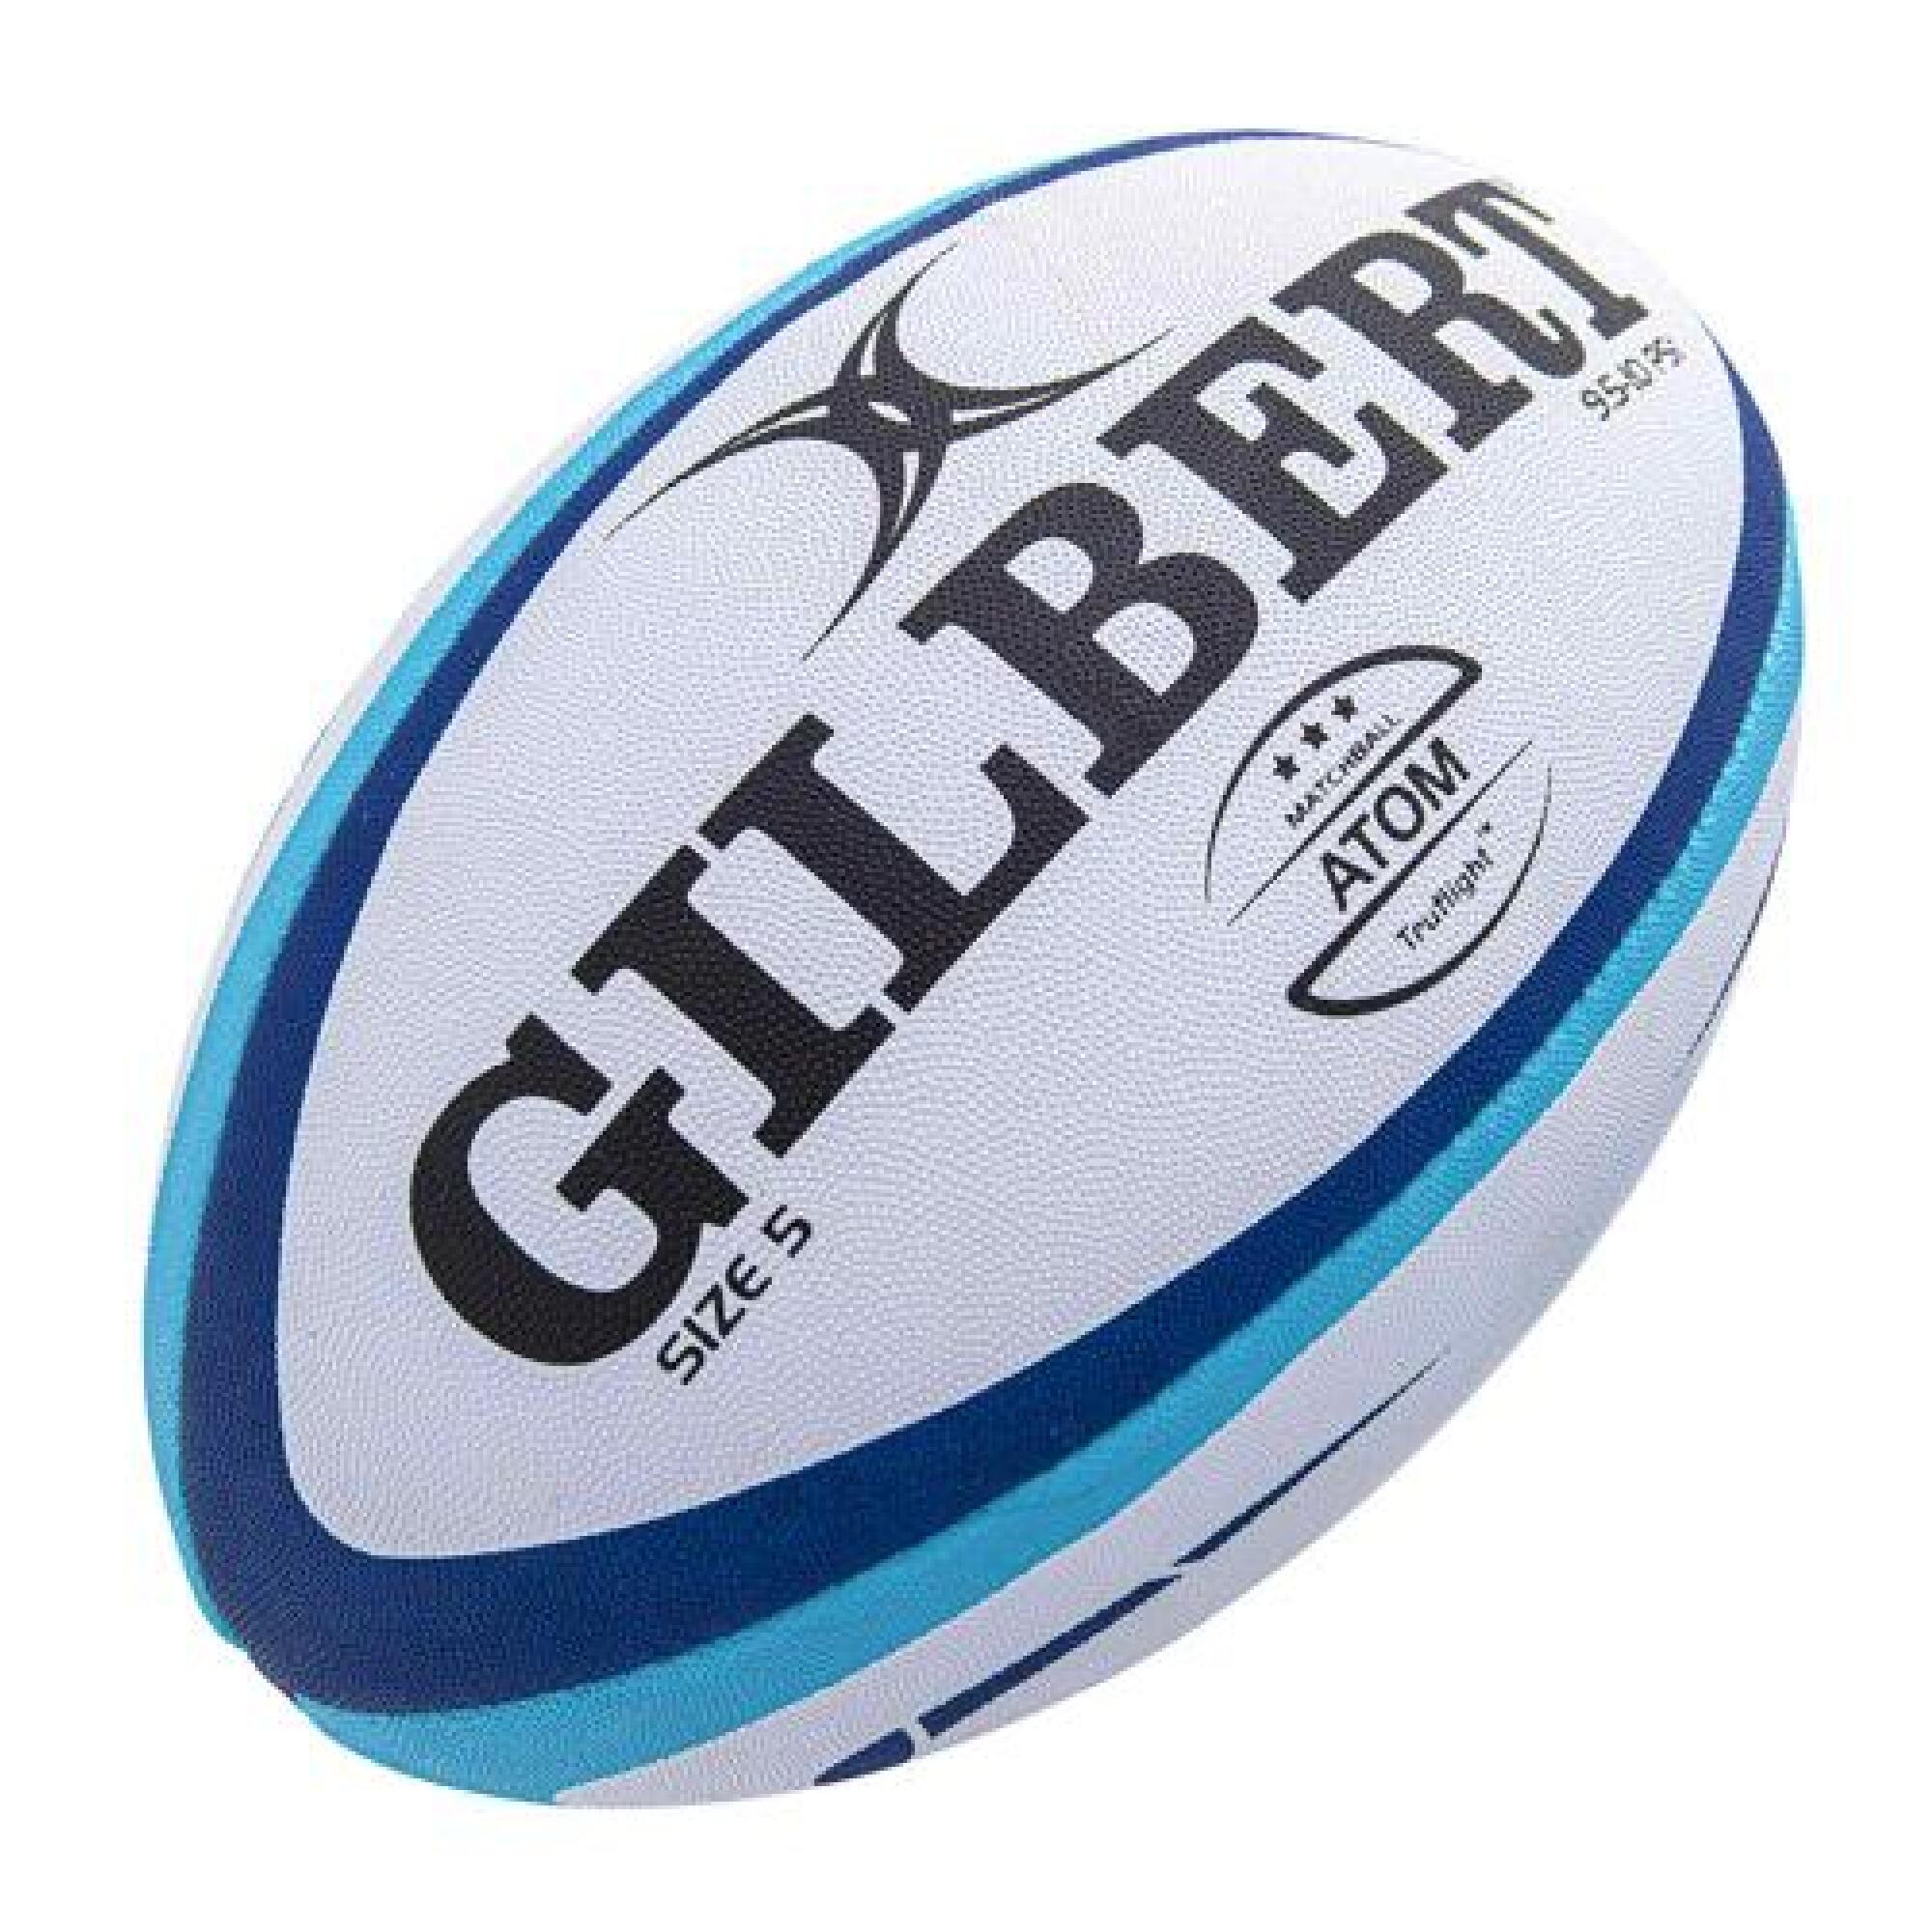 Minge Rugby ATOM GILBERT decathlon.ro  Mingi rugby si accesorii